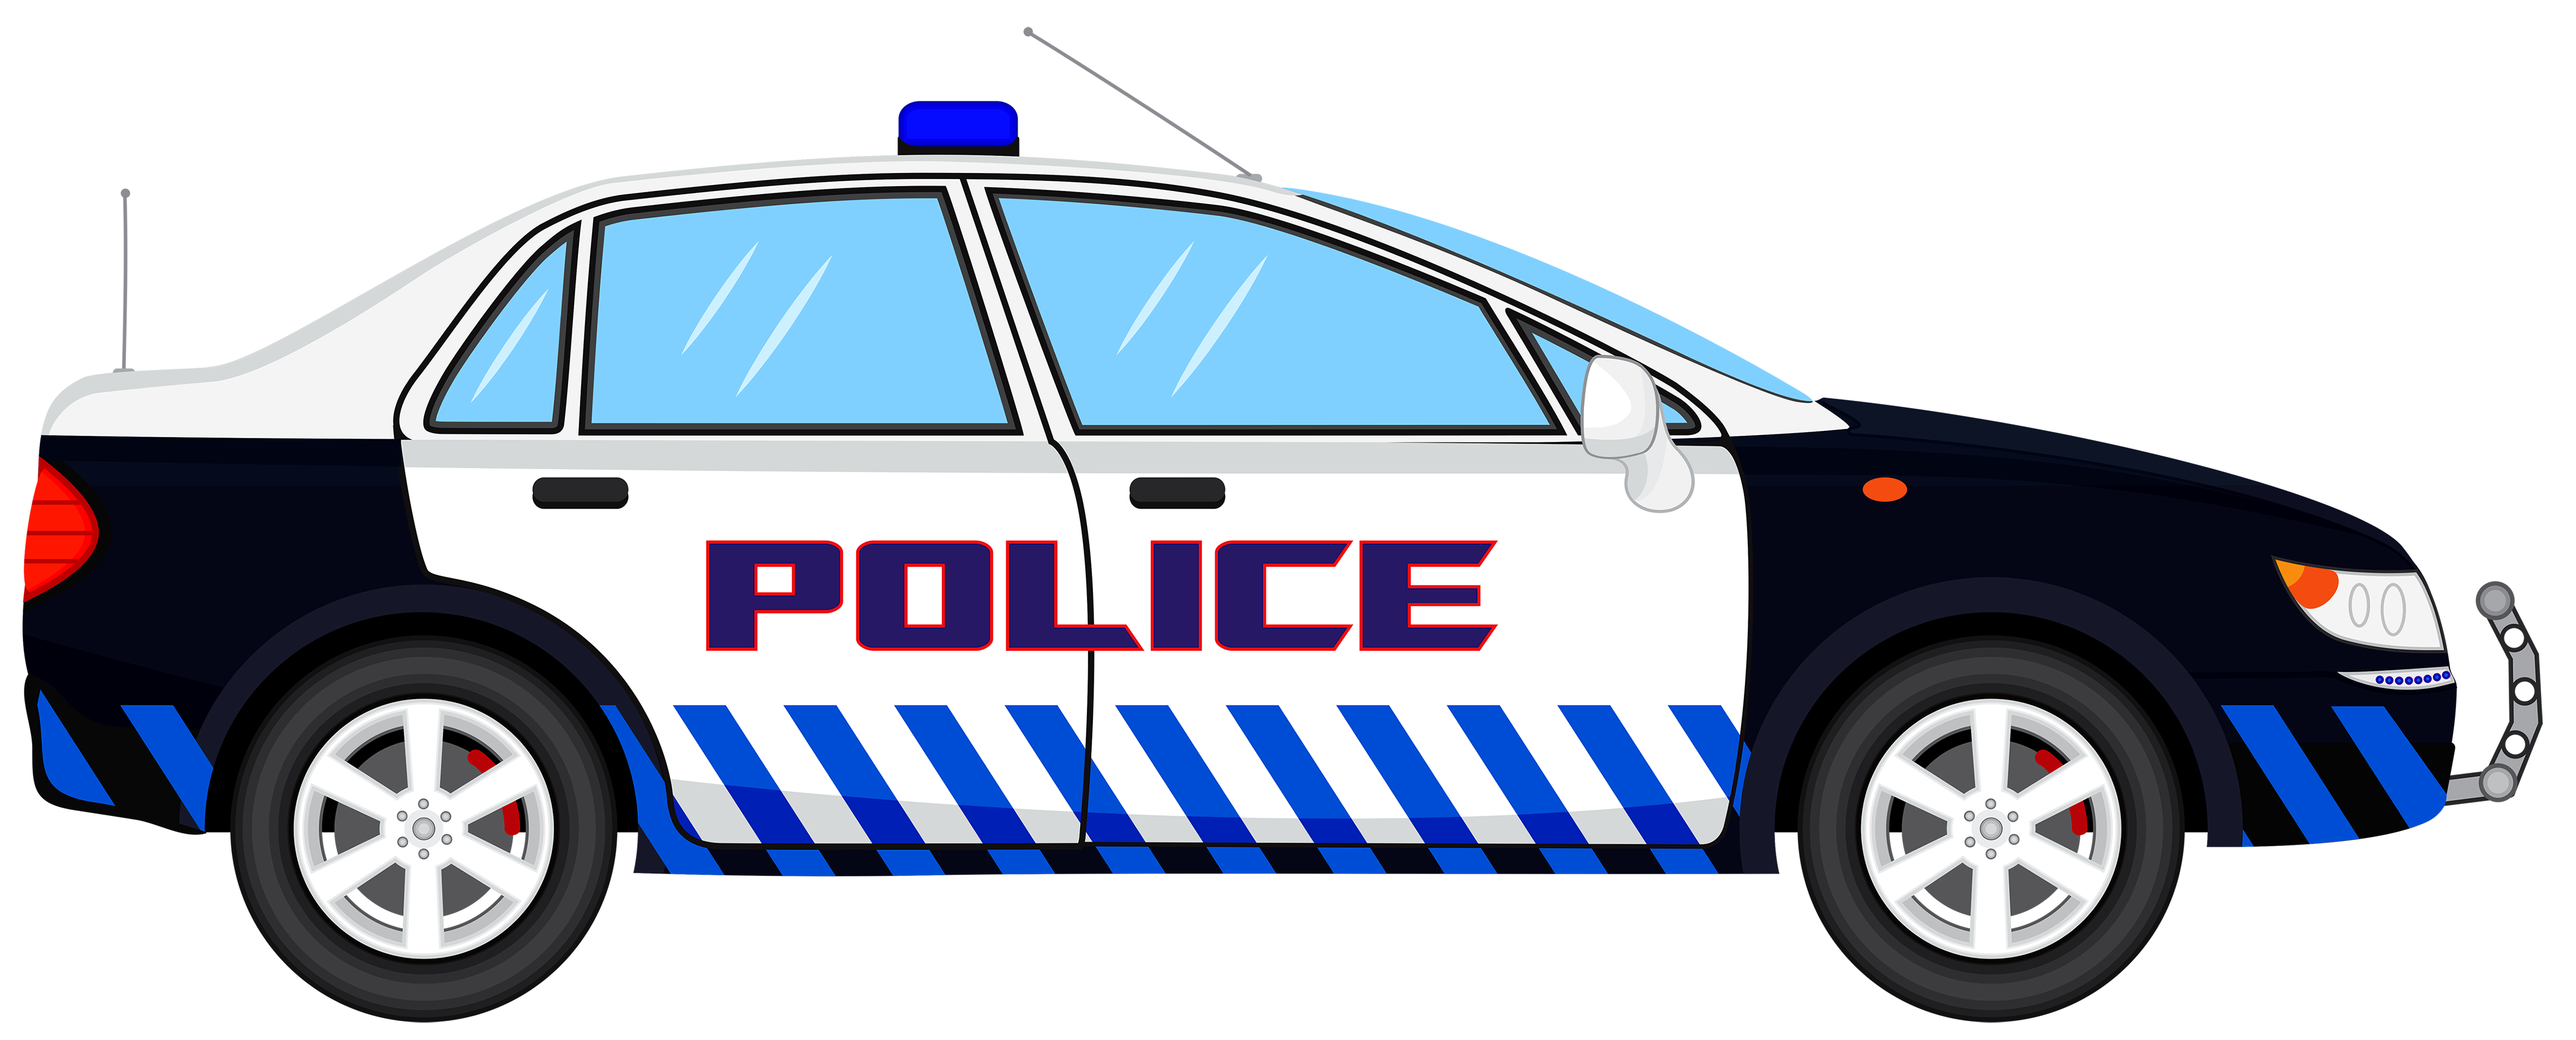 free clip art police car - photo #12